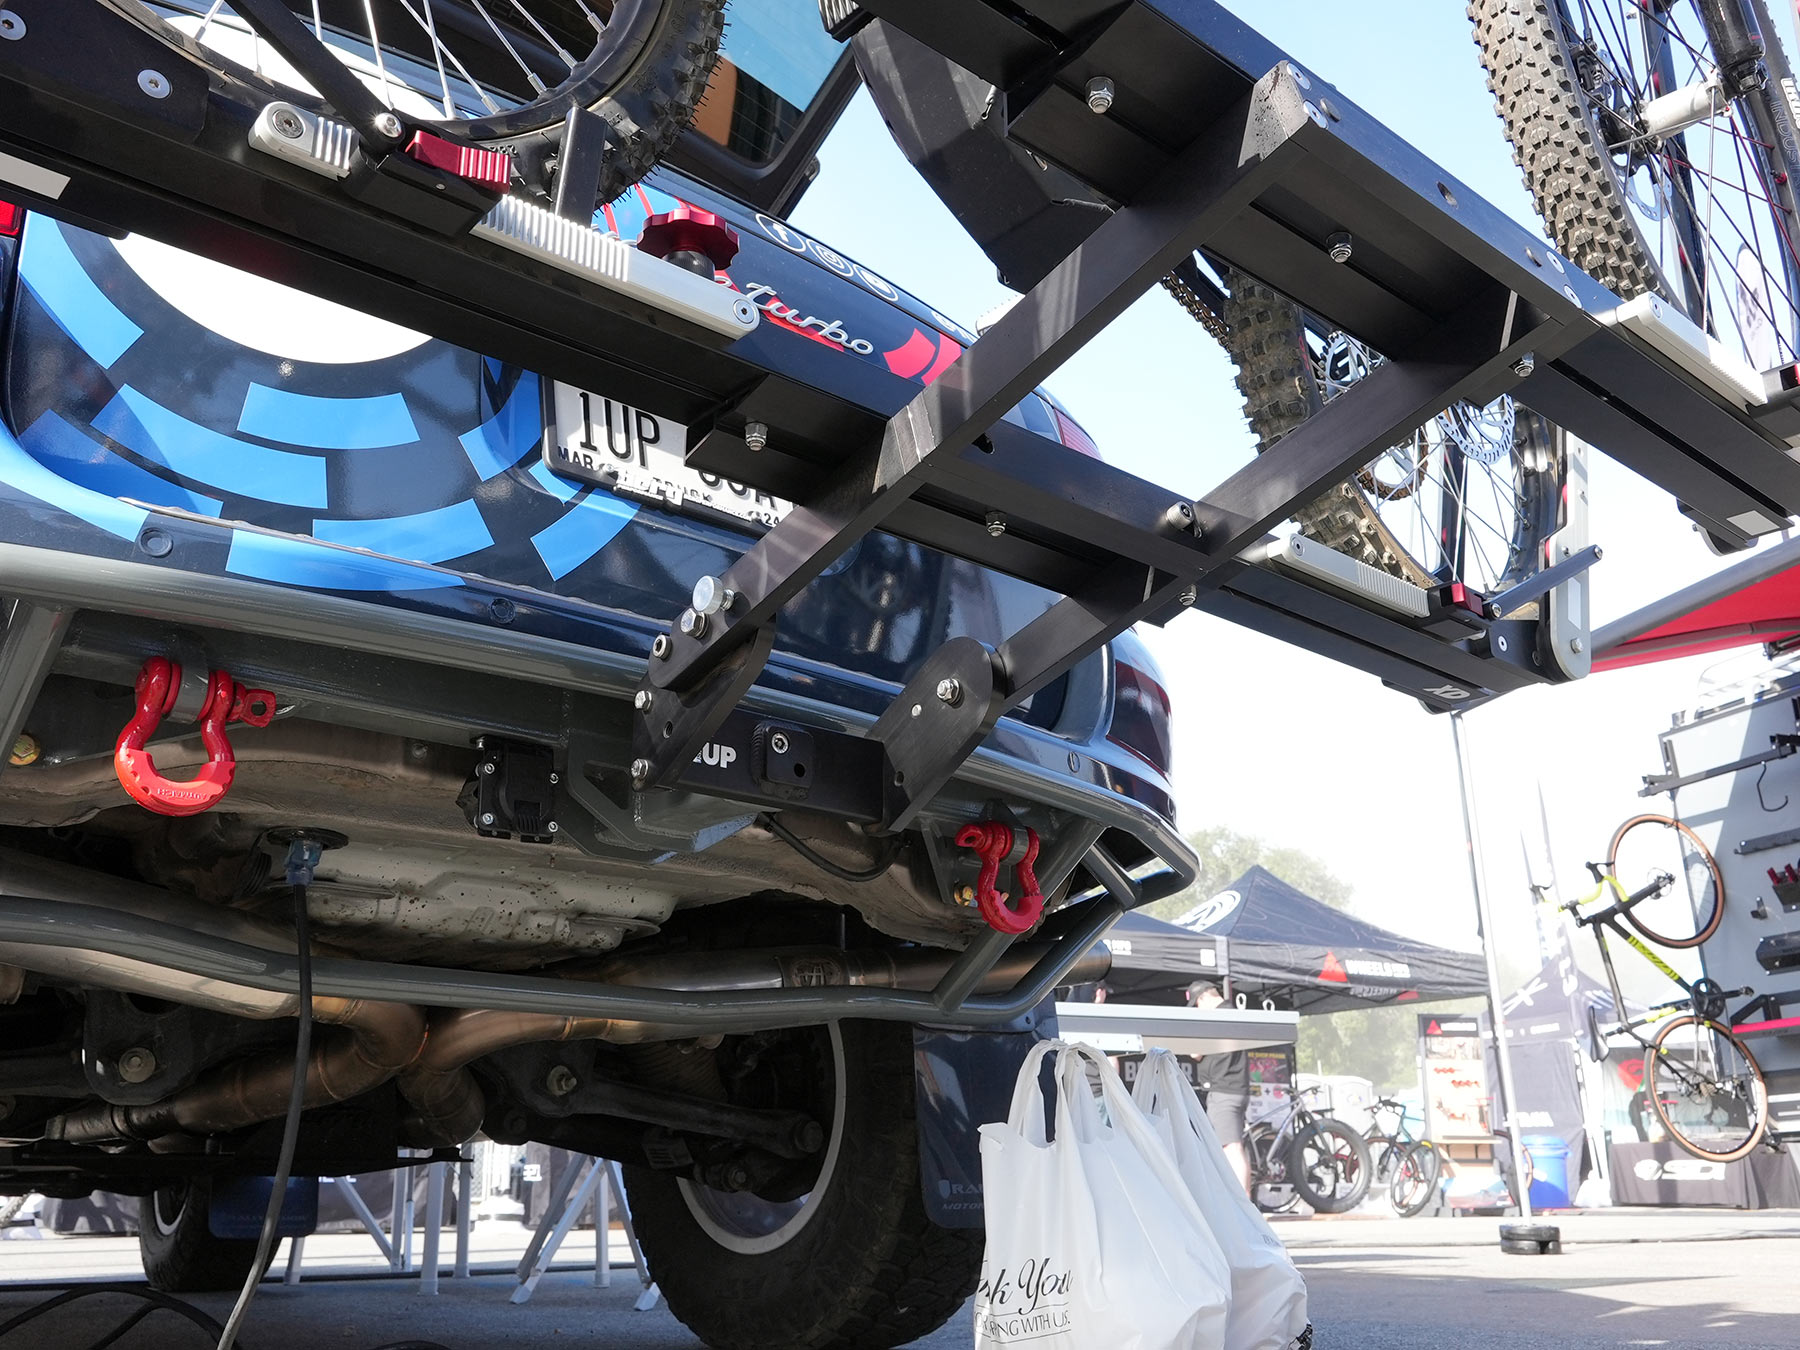 1up racks xd extreme duty heavy duty hitch mount 自行車架適用於較重的電動自行車